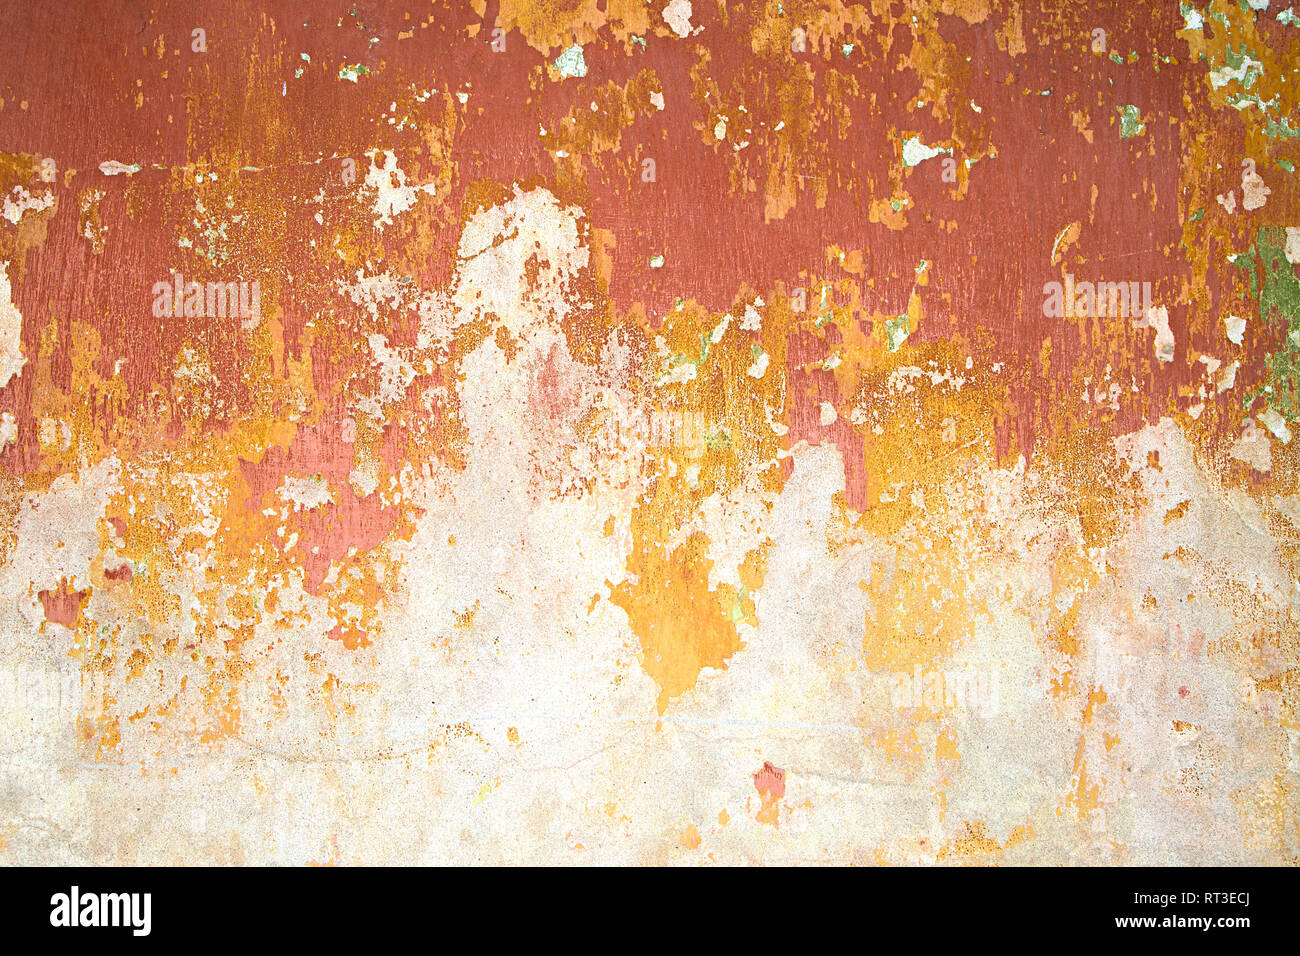 Grunge wall texture close up Stock Photo